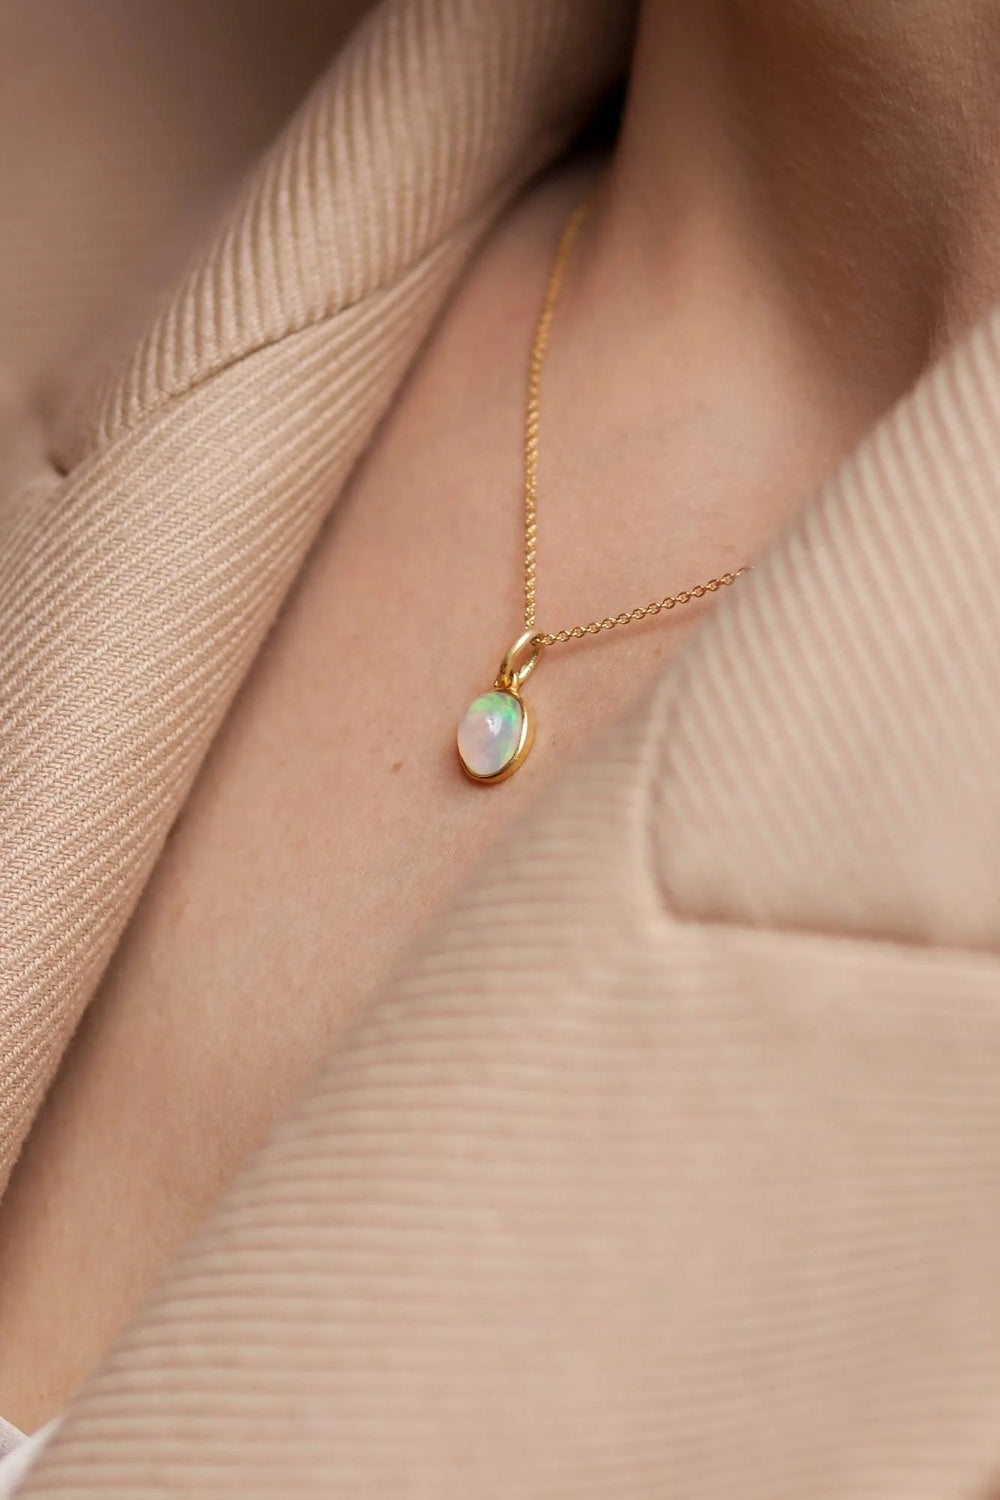 8 mm Ethiopian Opal Gold Necklace